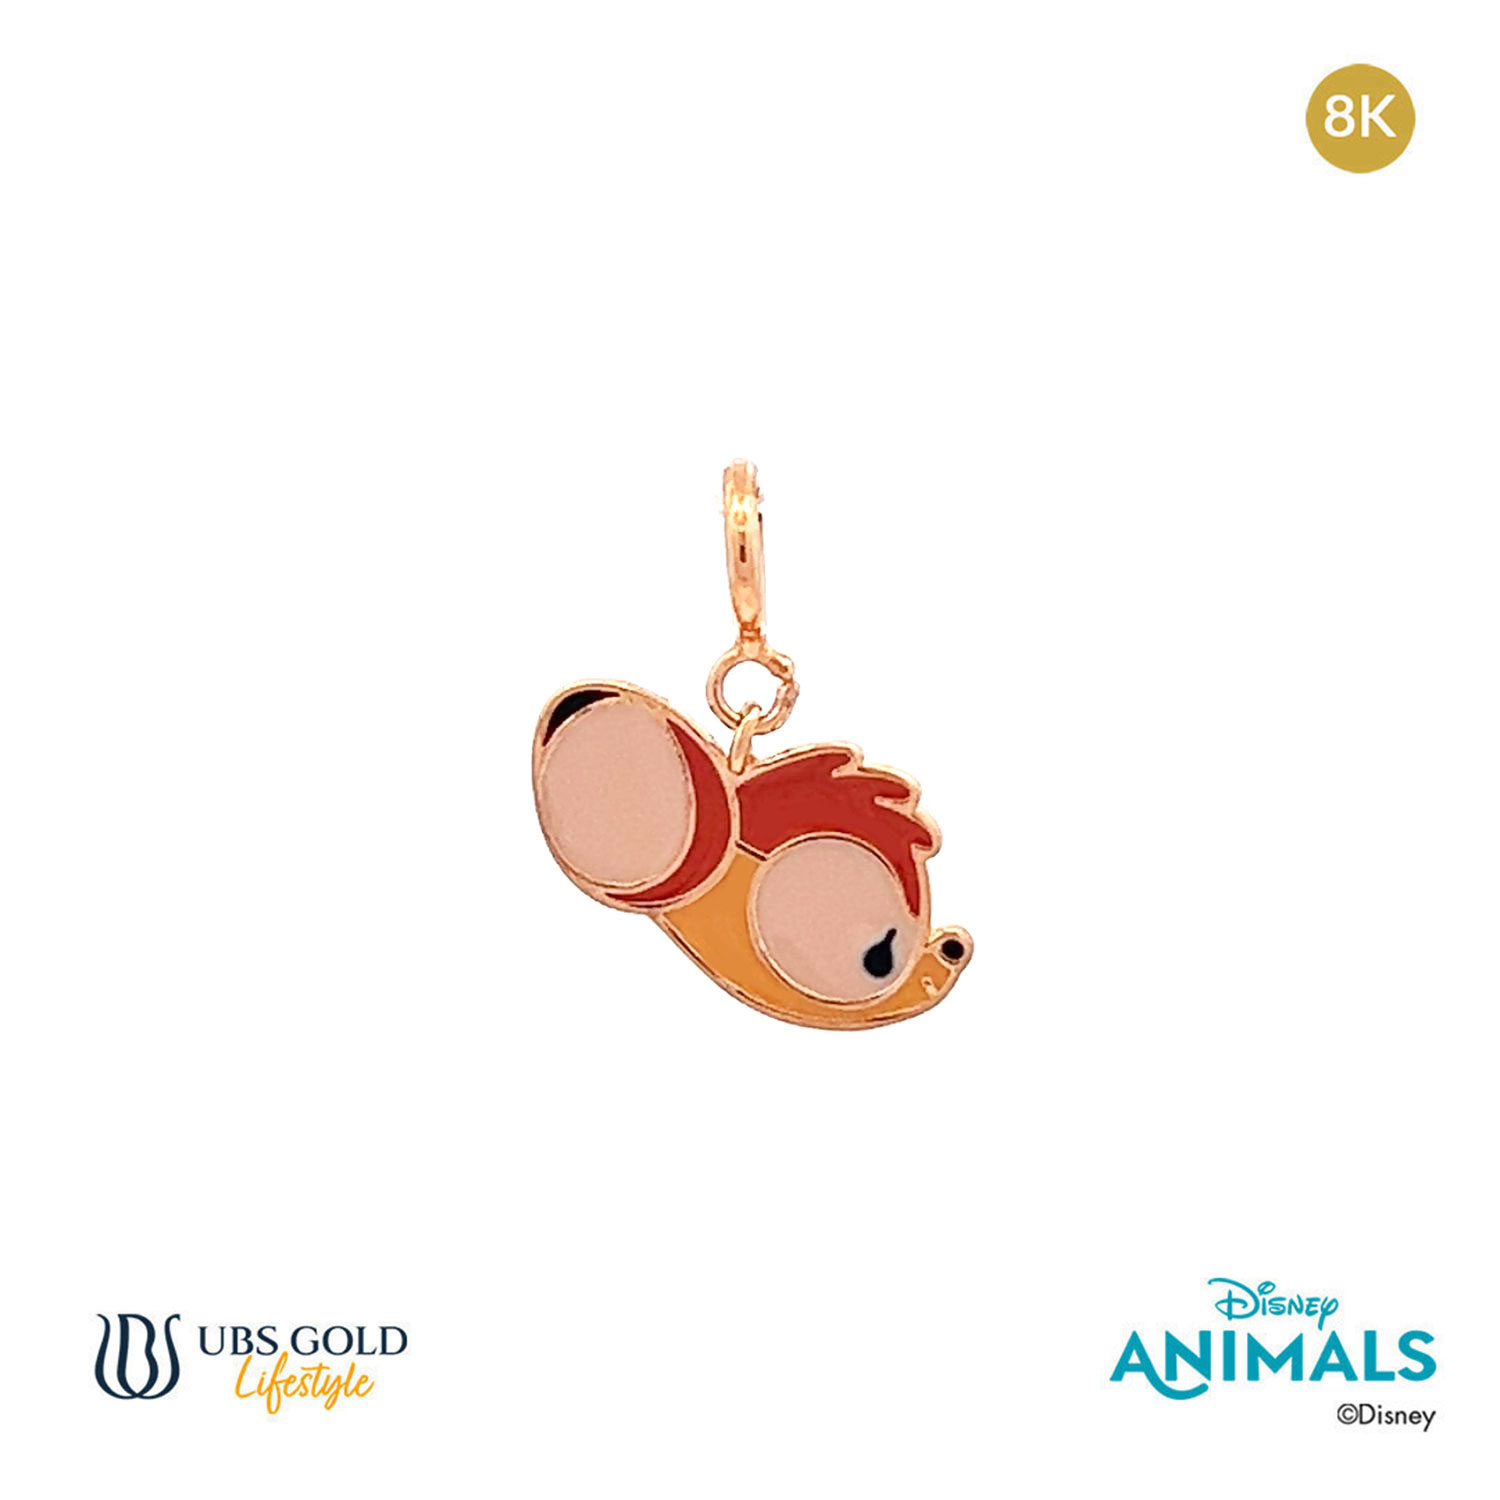 UBS Liontin Emas Disney Animals - Cmy0122K - 8K